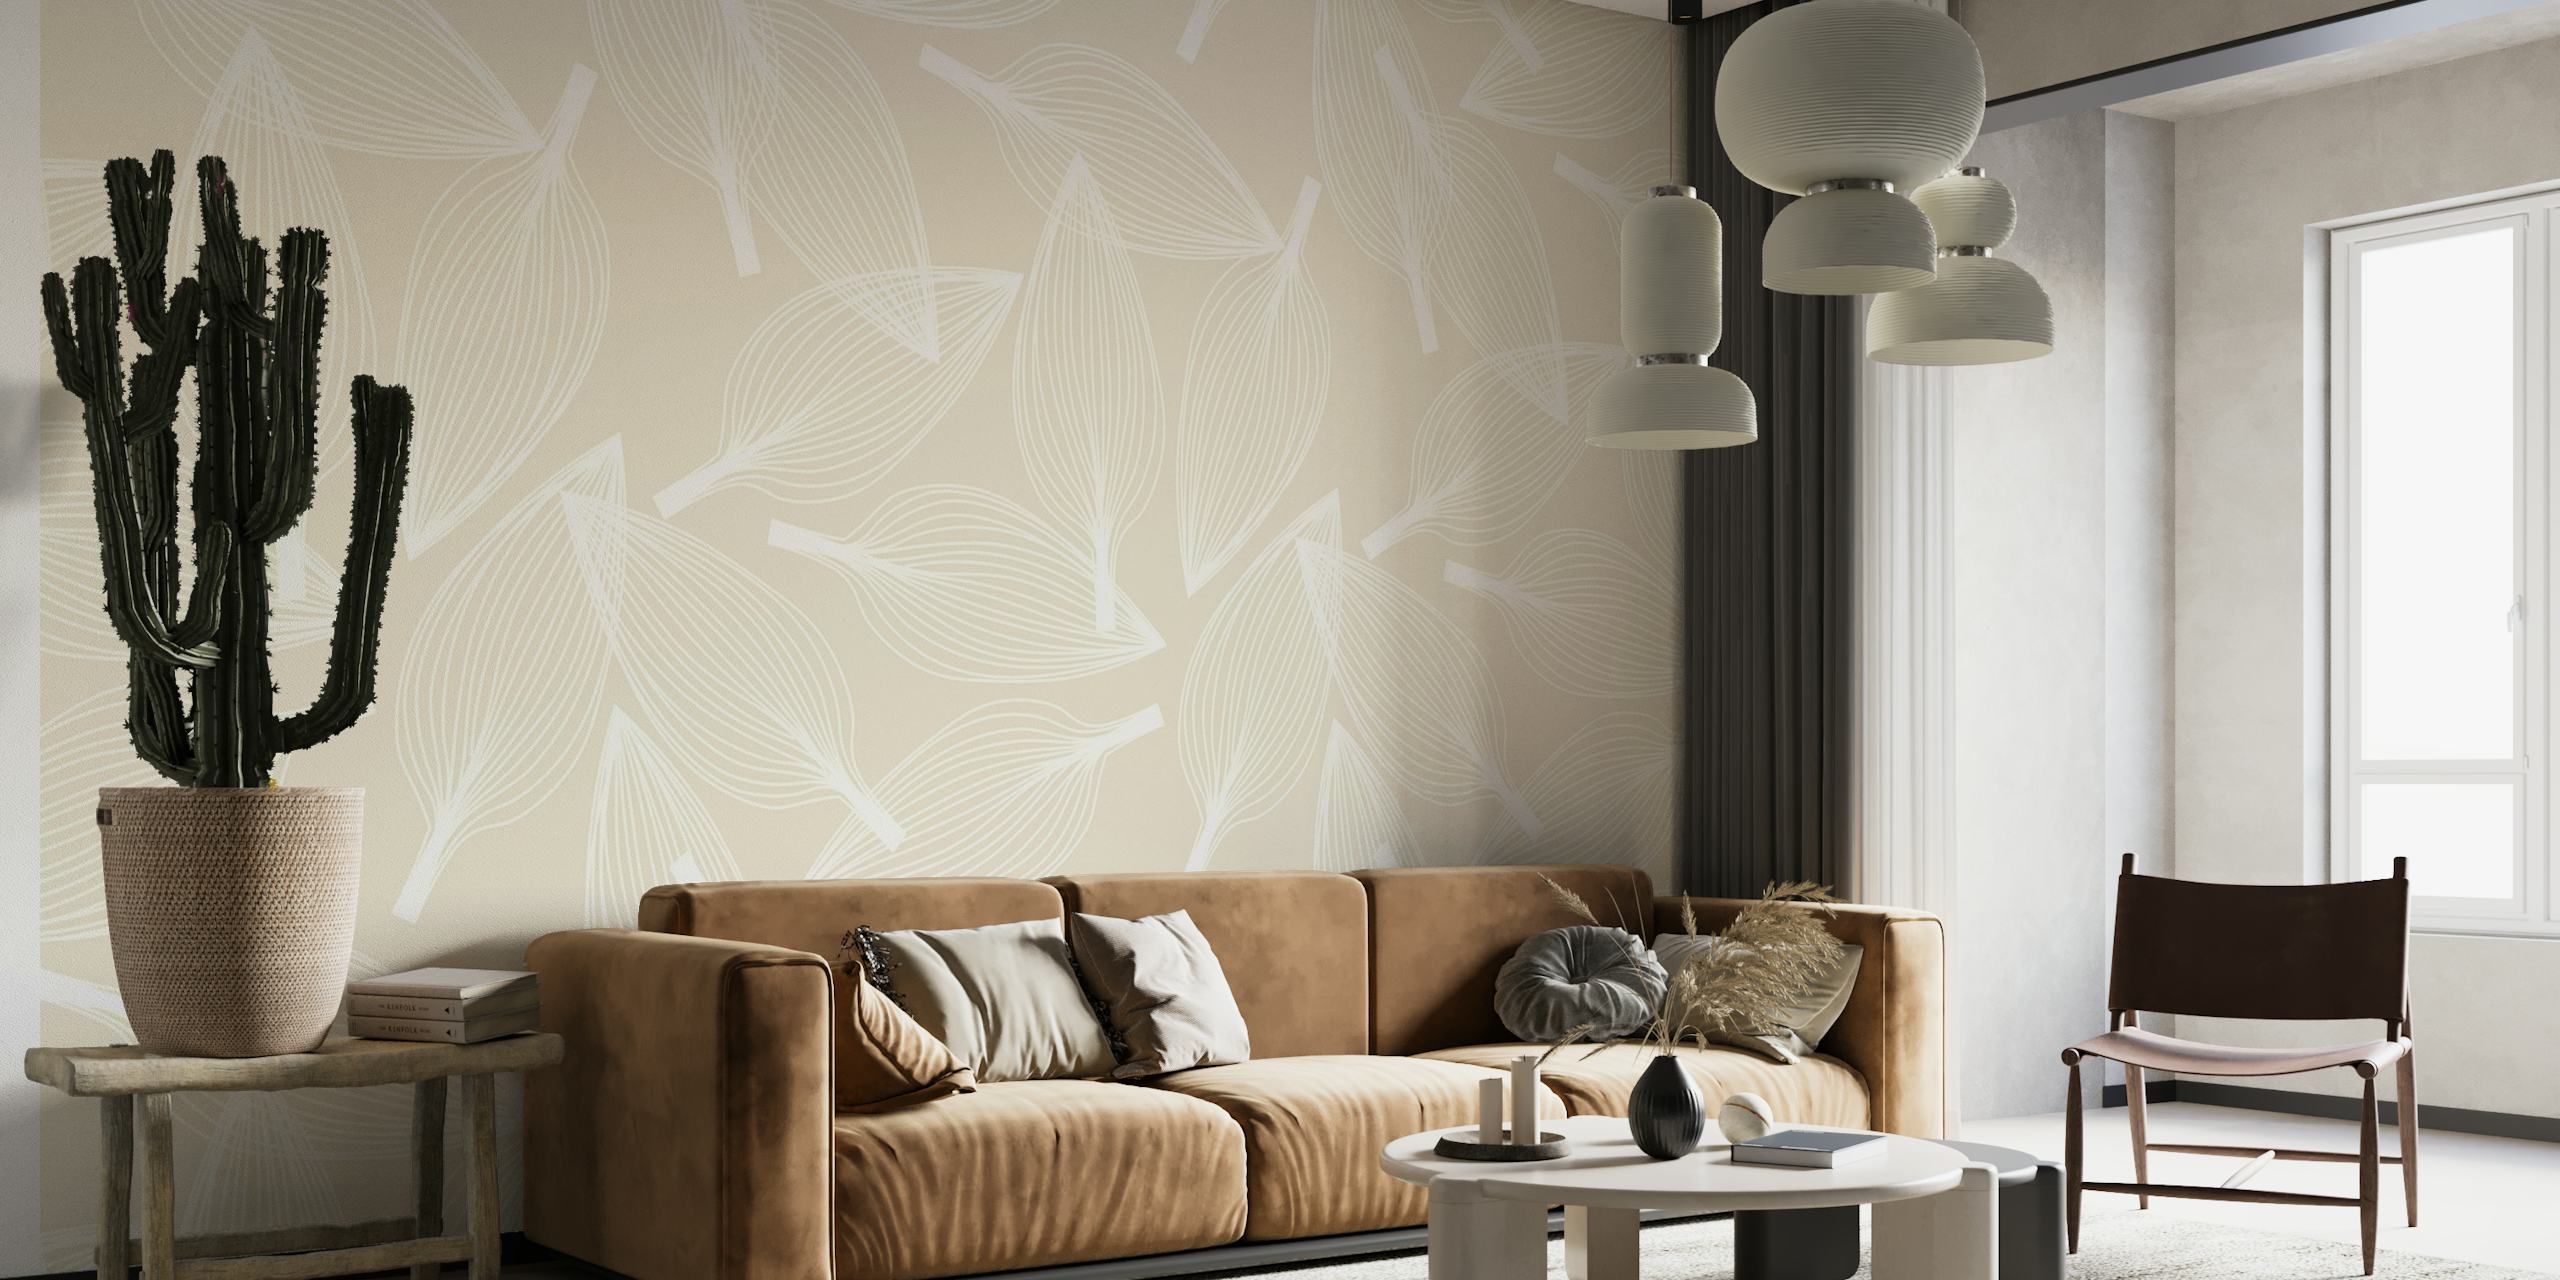 Mural de pared en tonos neutros con un relajante diseño de patrón orgánico